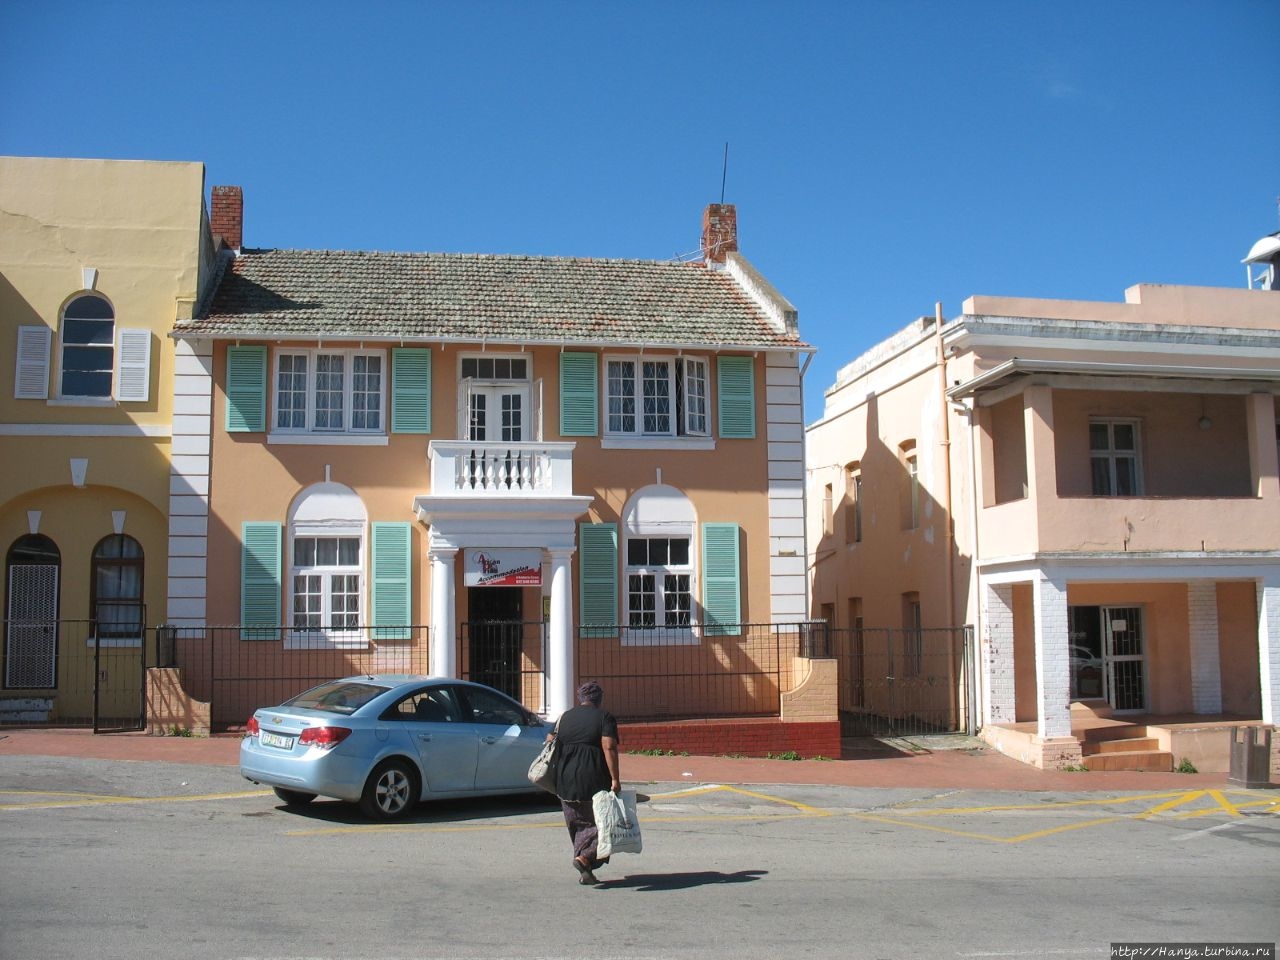 Улица Хай-стрит и ее здания Грэхэмстаун, ЮАР